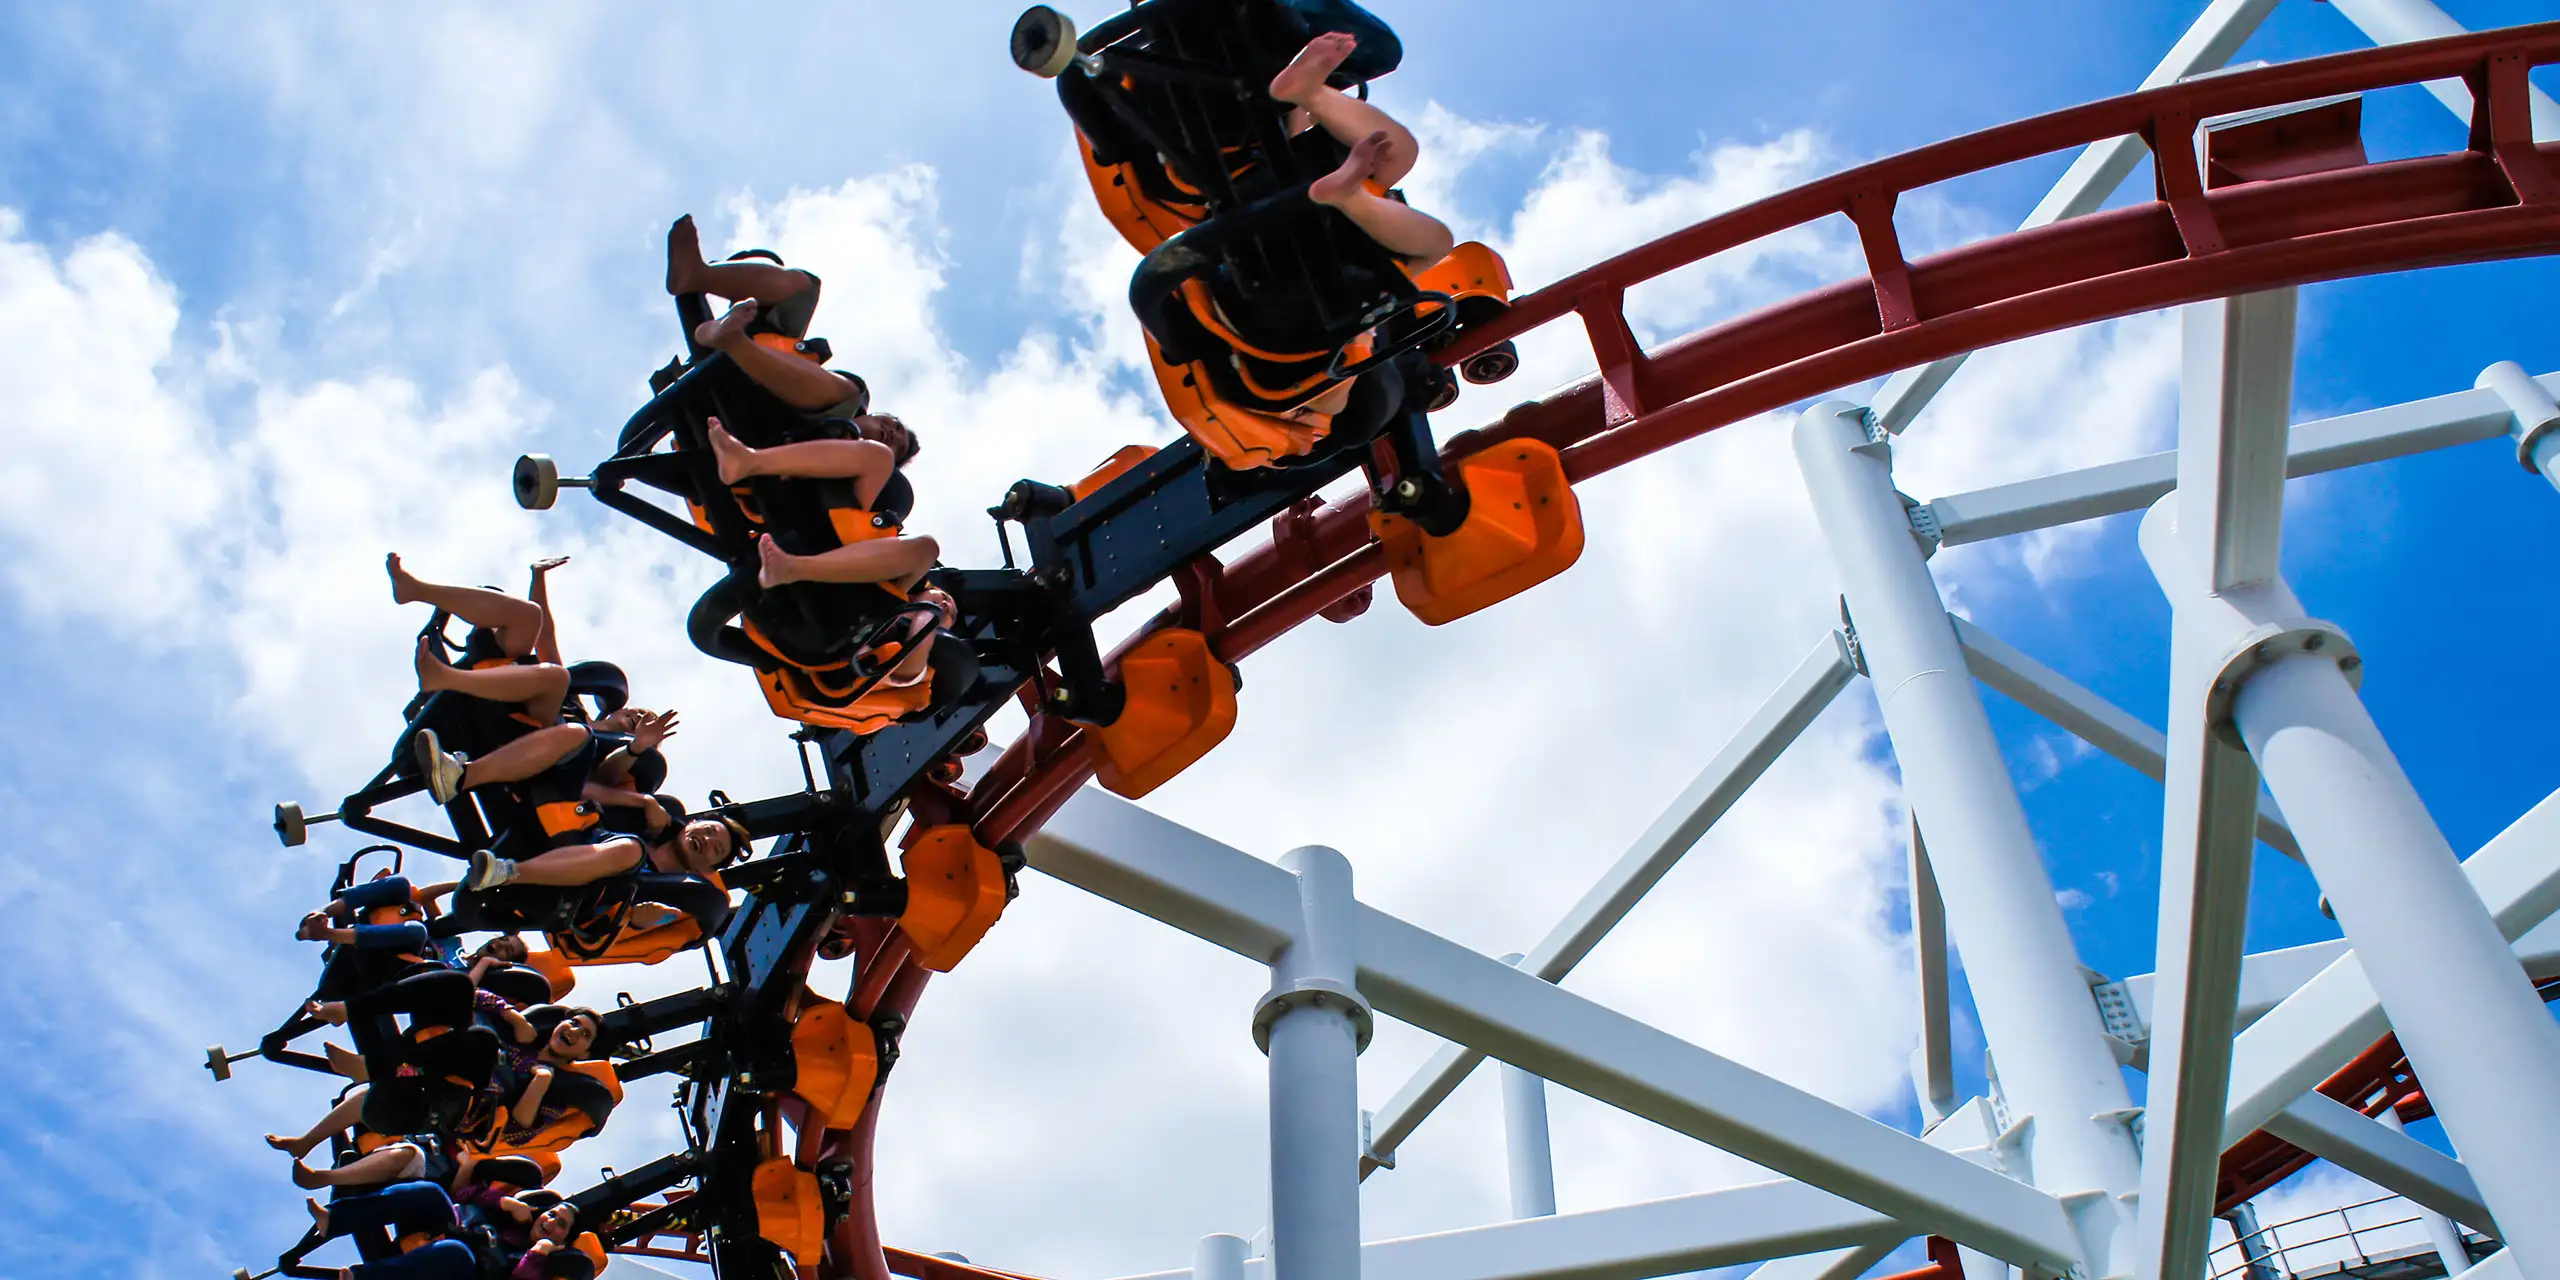 Roller Coaster; Courtesy of liewluck/Shutterstock.com